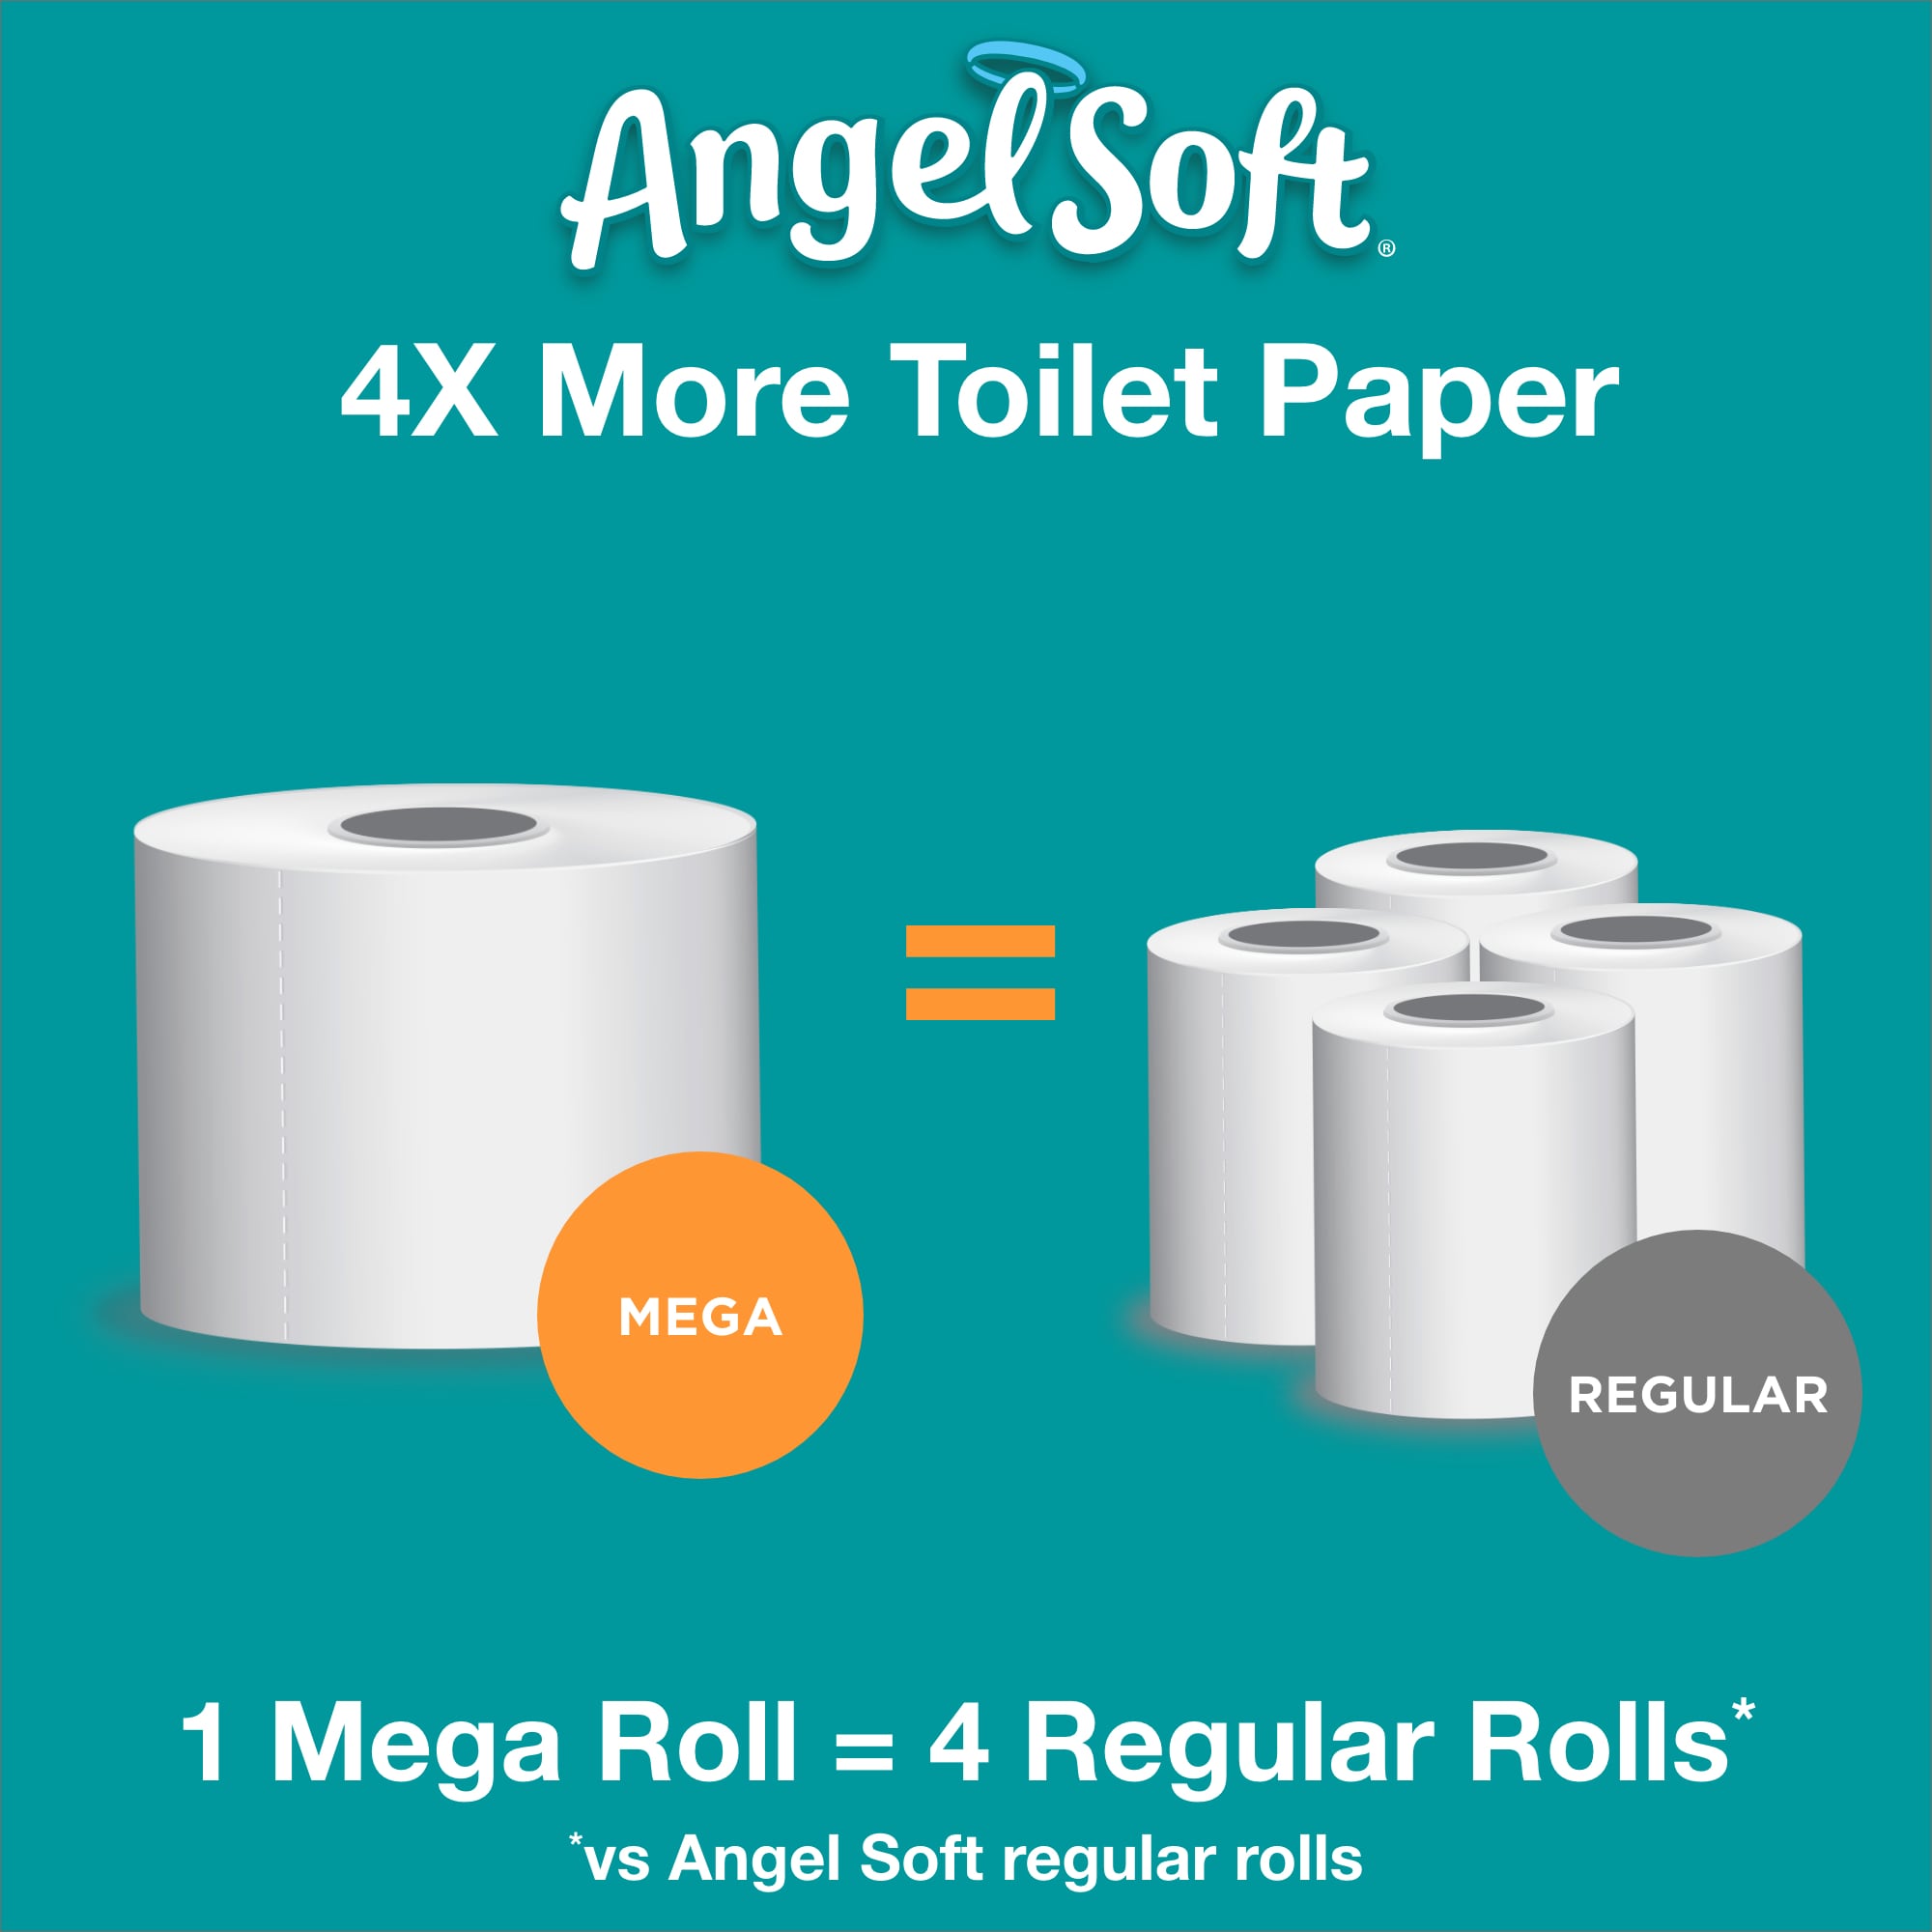 26 Recycled Paper Towel Rolls, X-sturdy PT Tubes, Cardboard Rolls